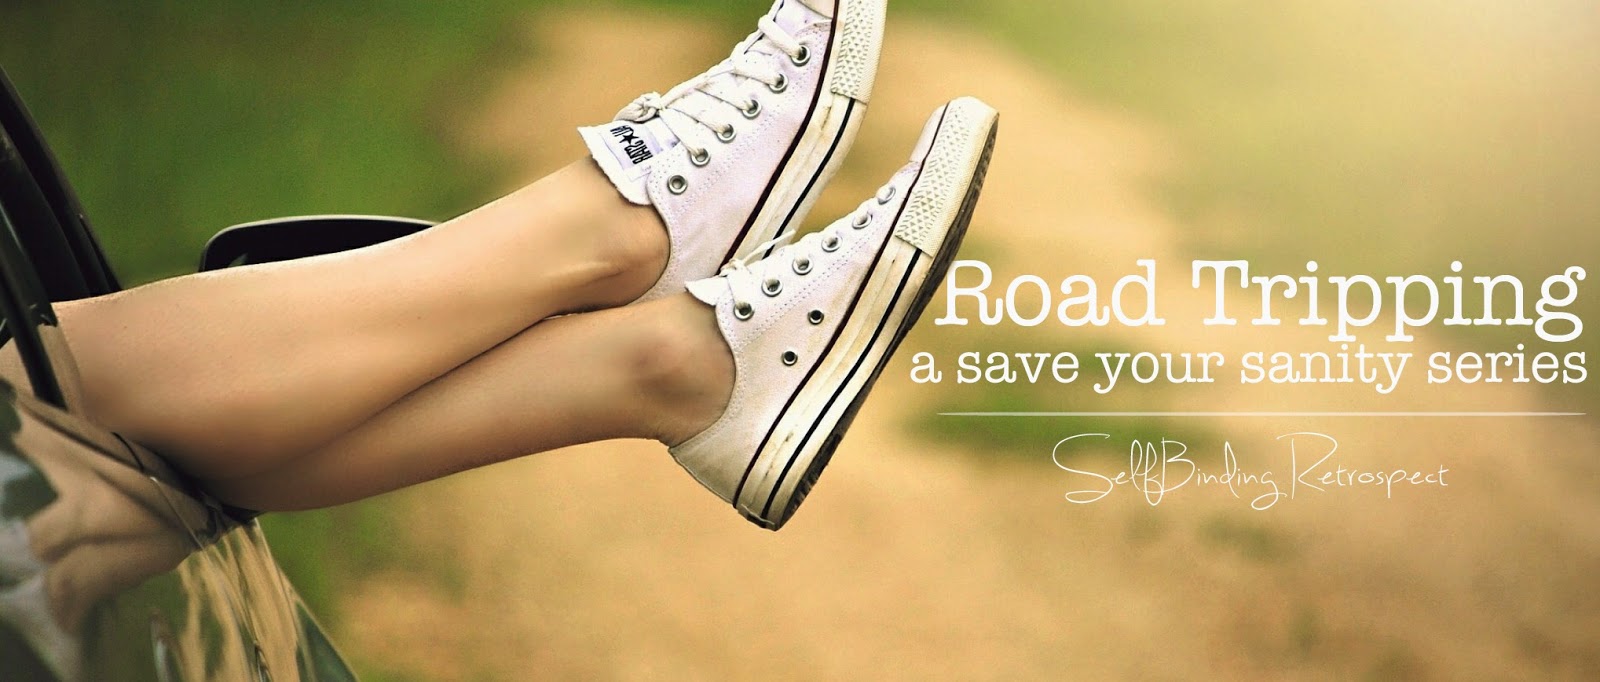 http://selfbindingretrospect.alannarusnak.com/2015/03/road-tripping-save-your-sanity-series.html